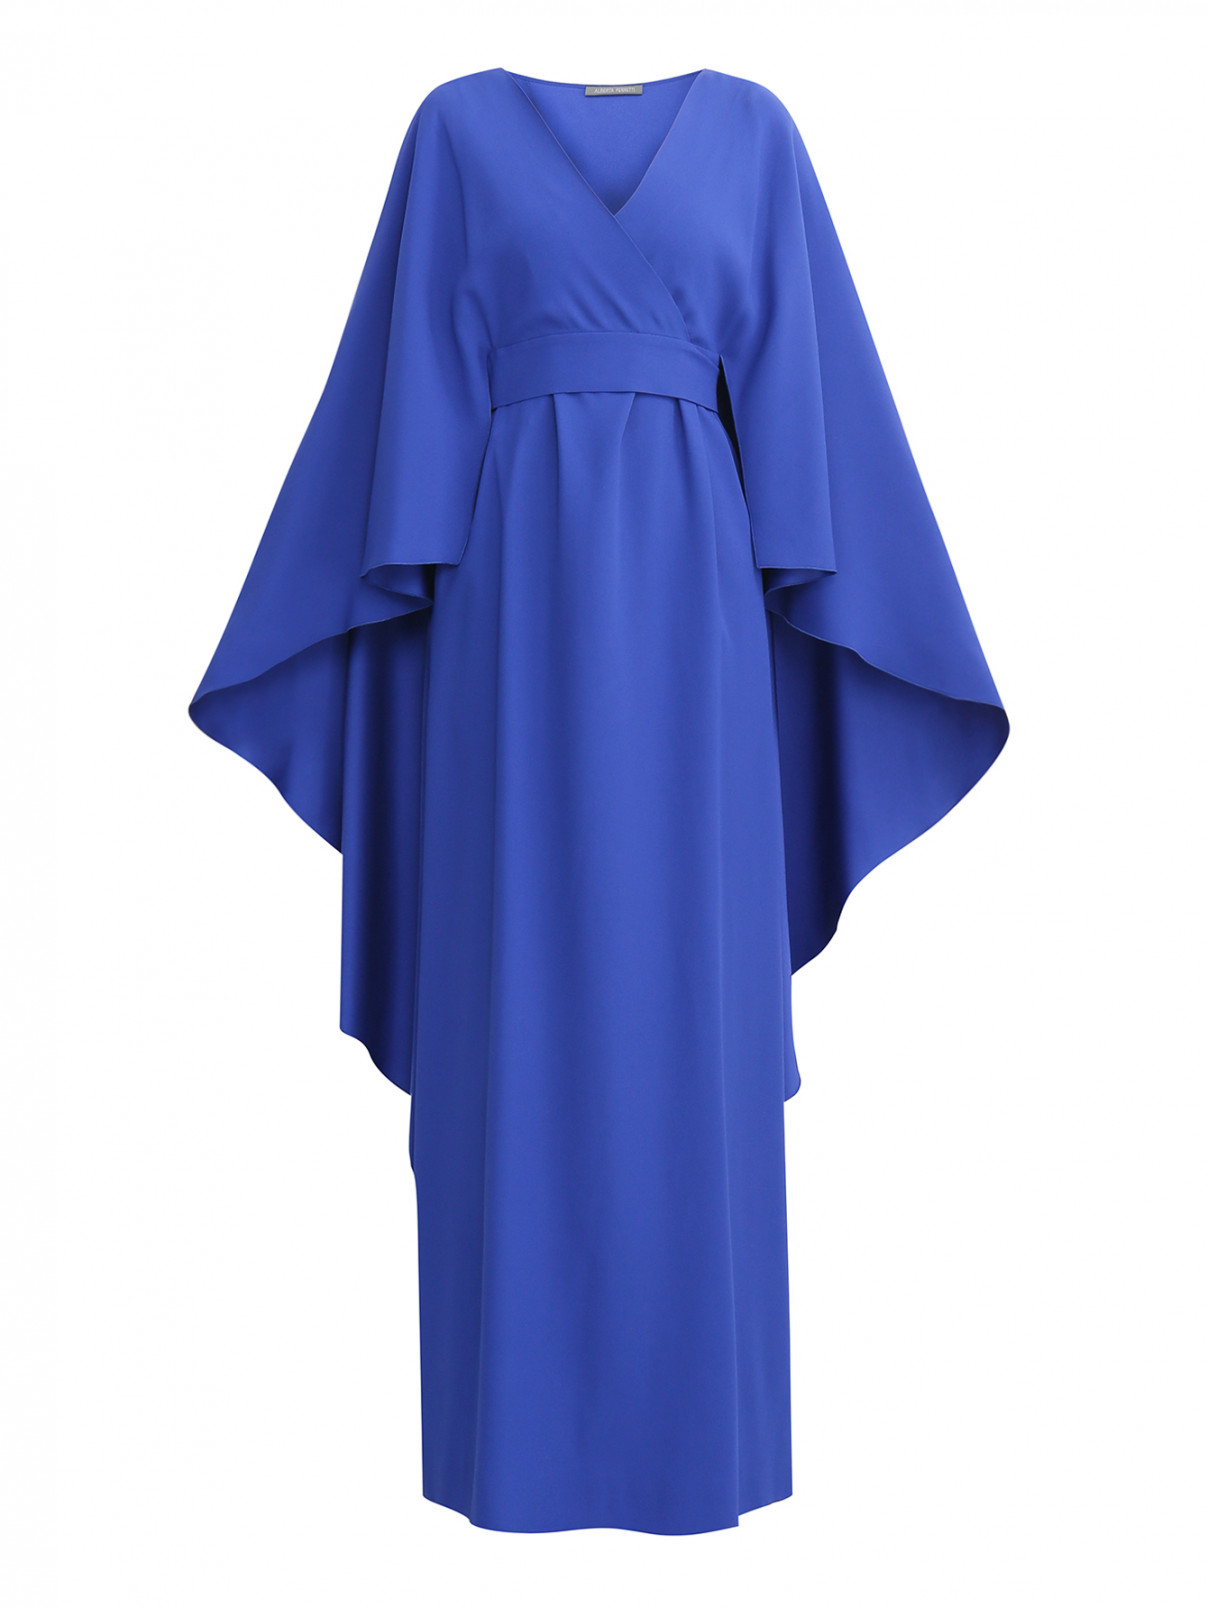 Платье-макси с запахом и воланами на рукавах Alberta Ferretti  –  Общий вид  – Цвет:  Синий